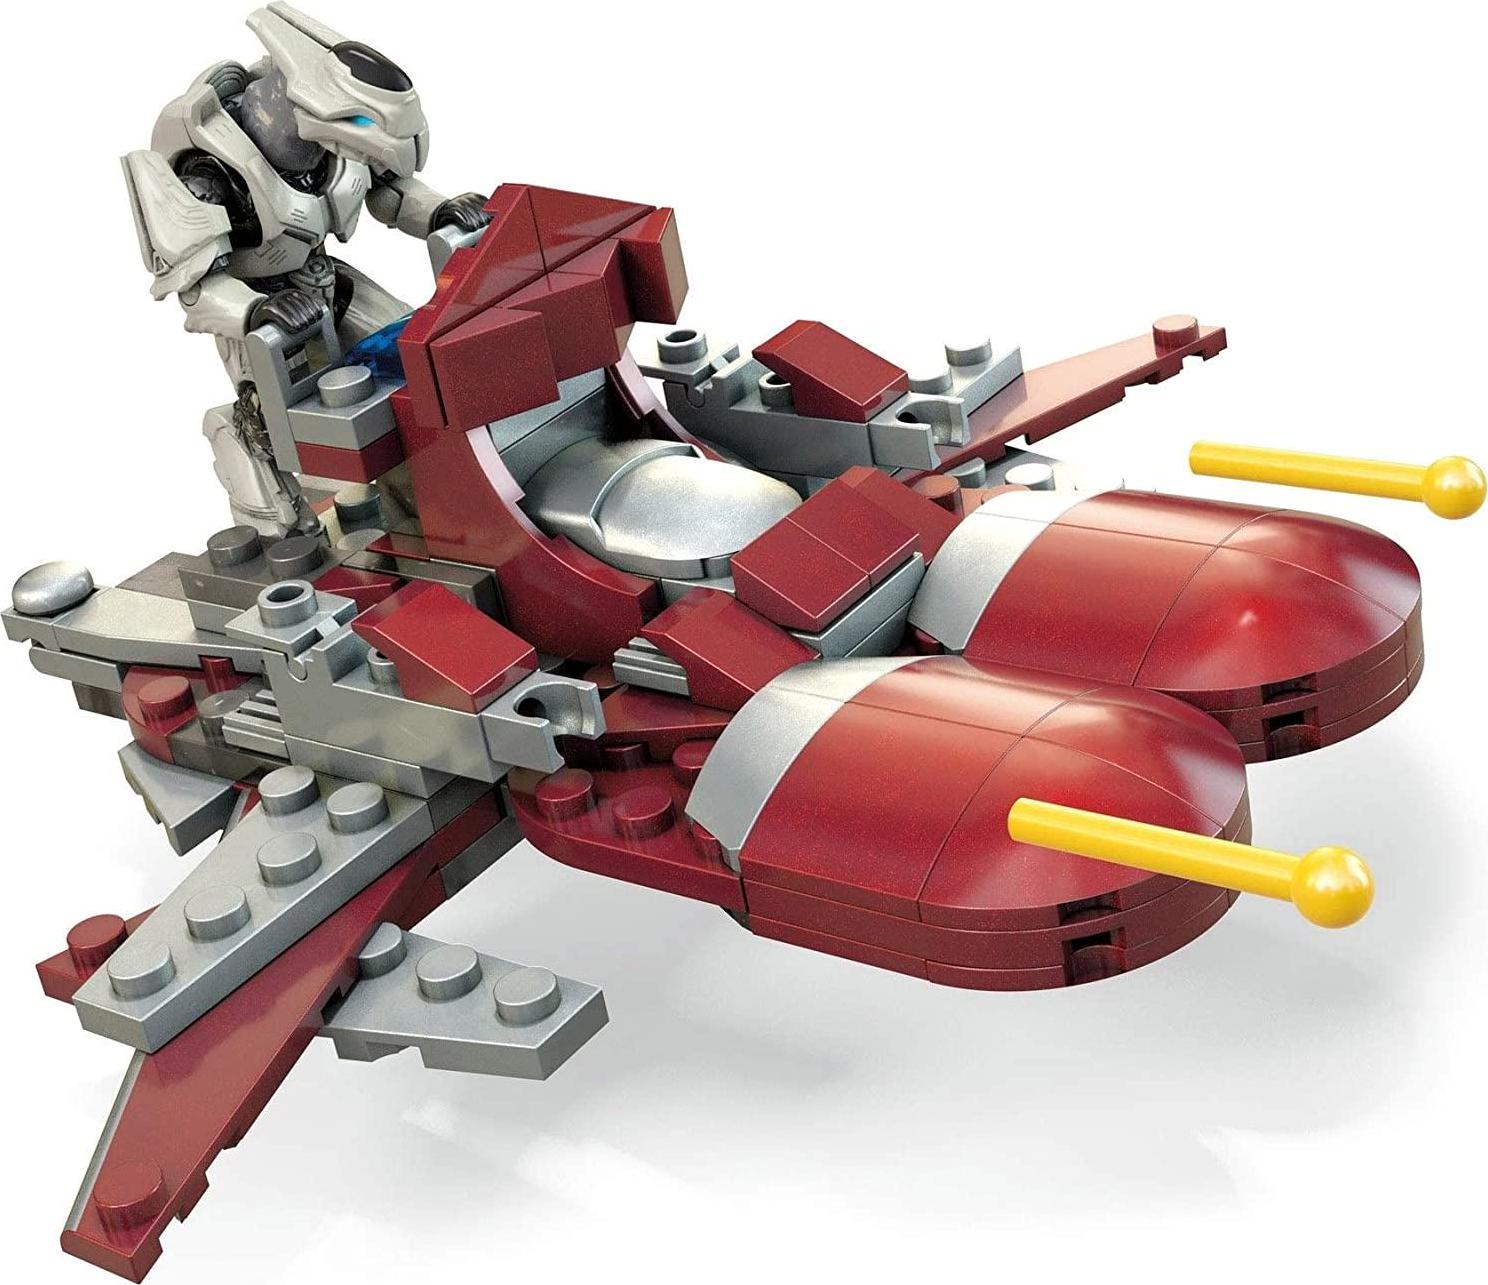 Mega Brands, Mega Construx Halo Banshee Breakout Vehicle Halo Infinite Construction Set with Spartan Recon Character Figure, Building Toys for Kids